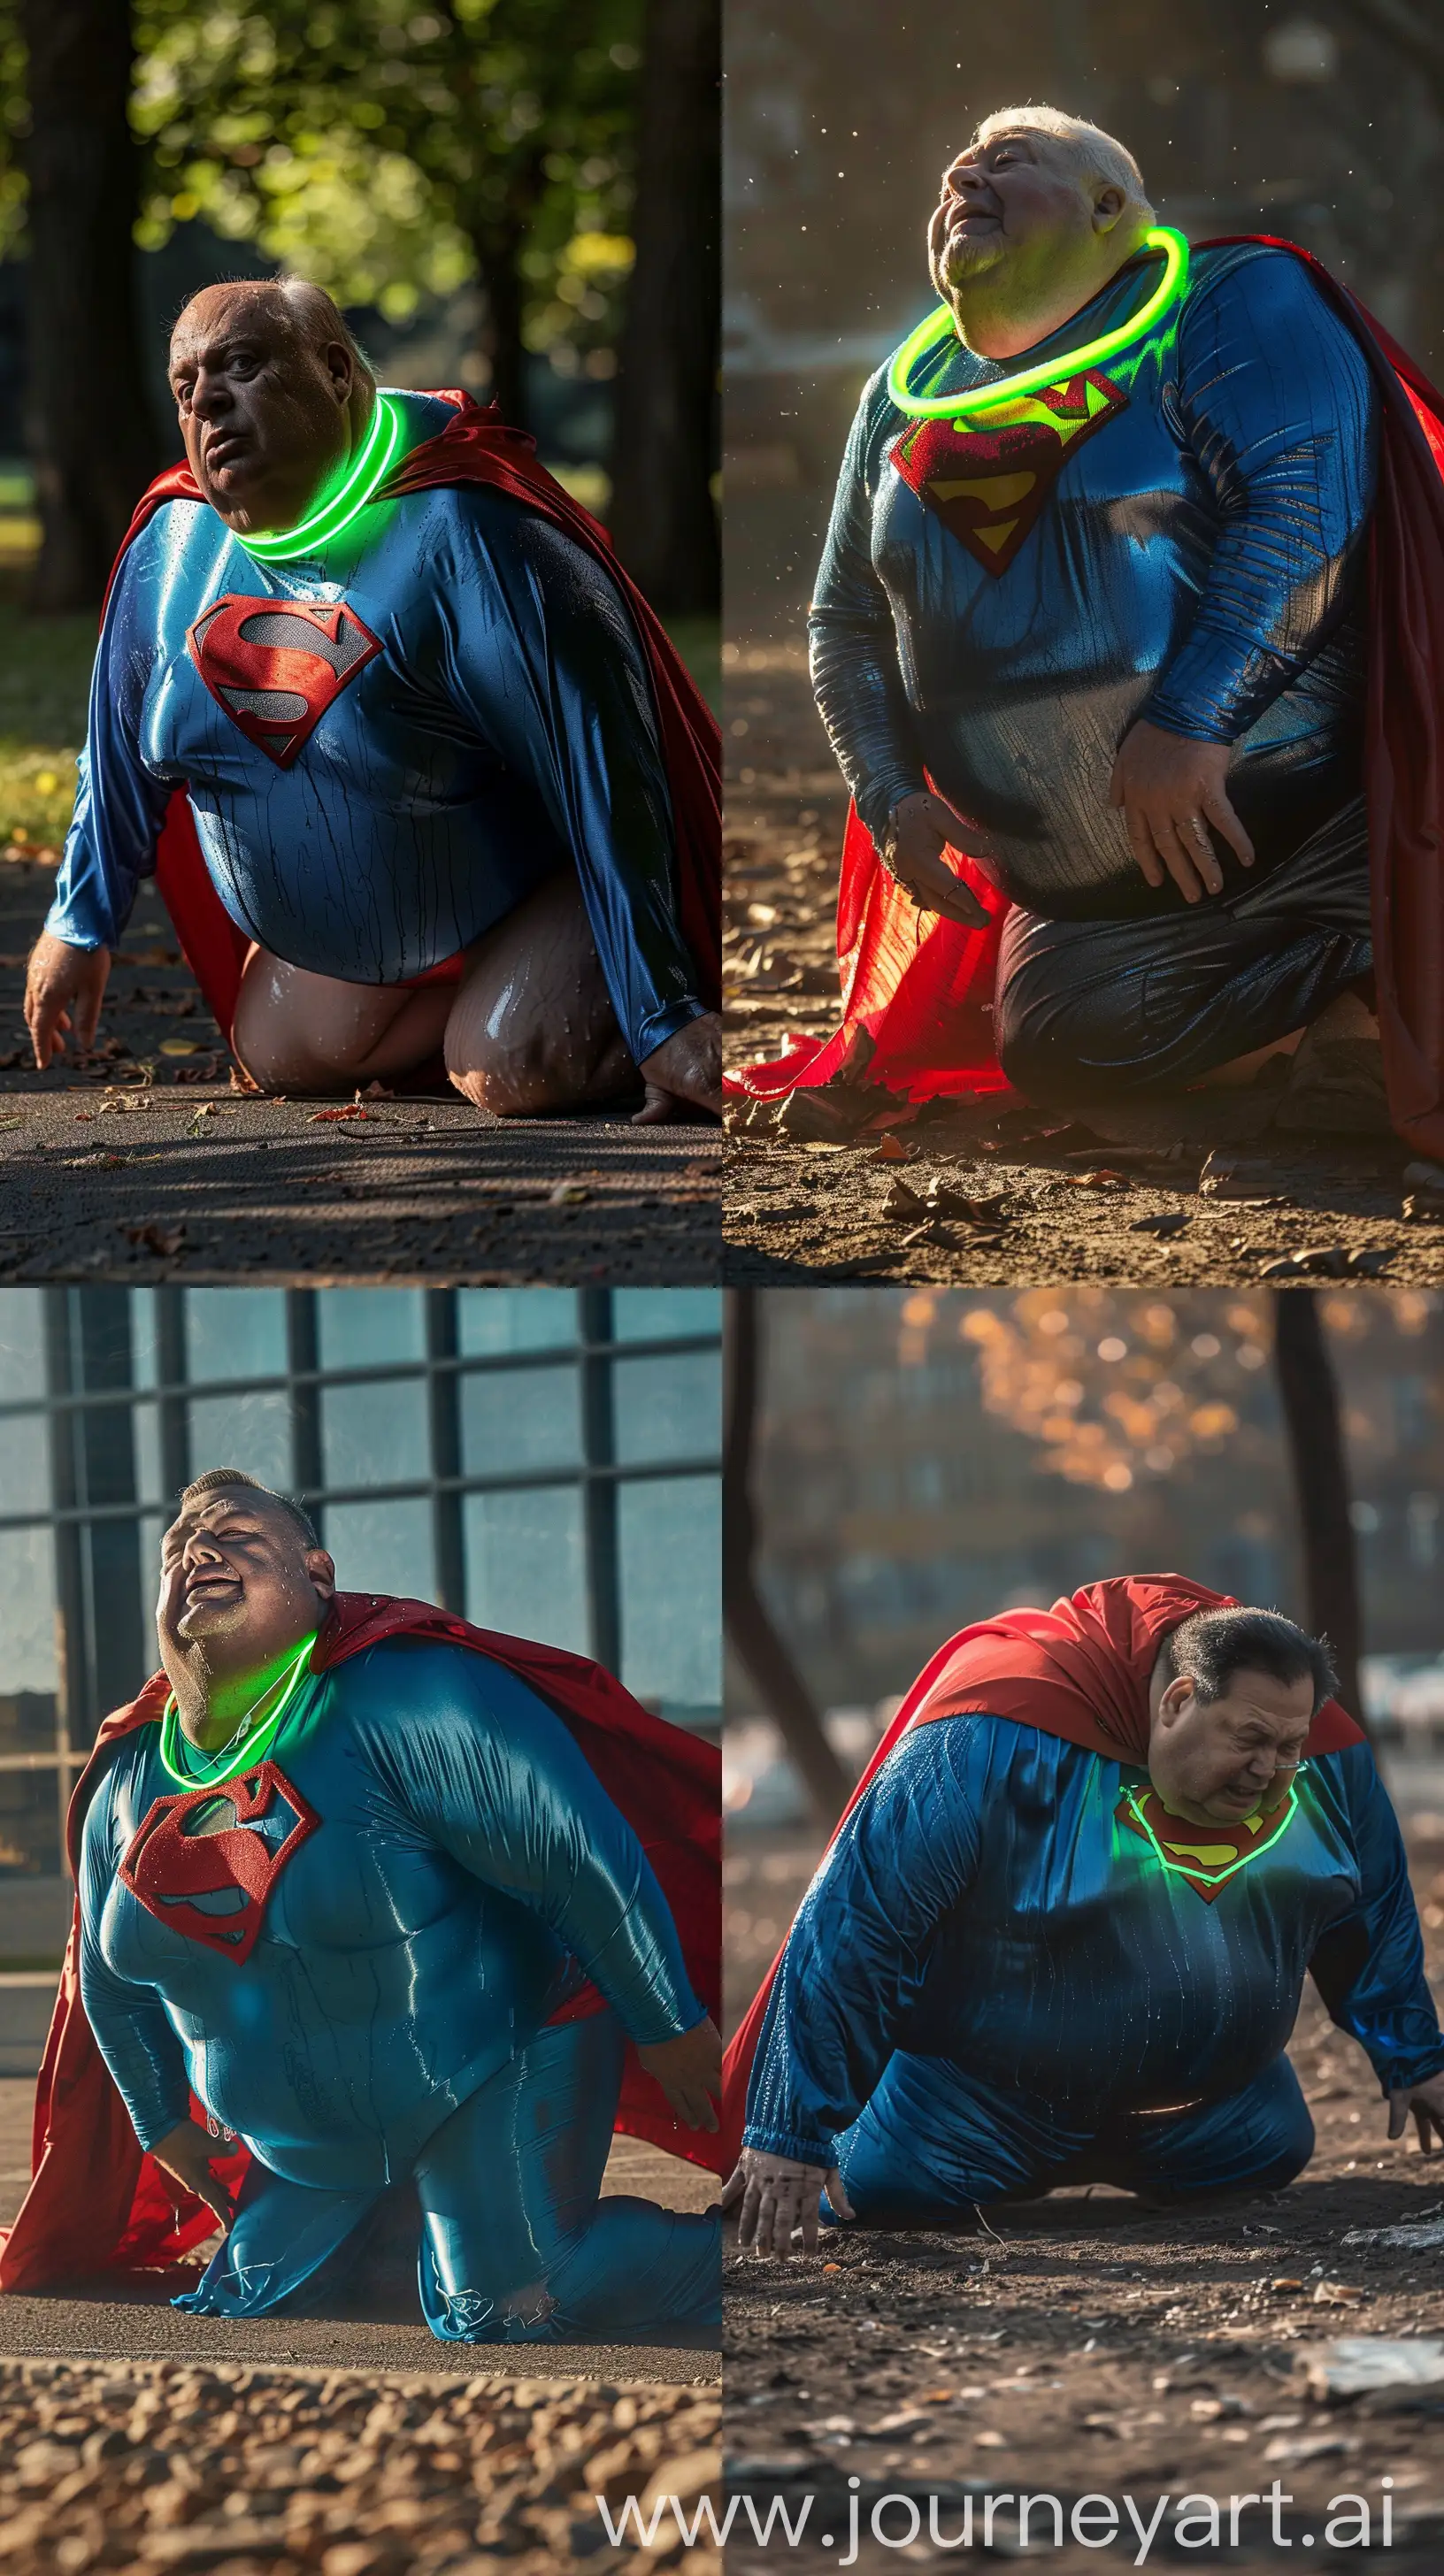 Elderly-Superman-in-Vibrant-Blue-Suit-Kneeling-Outdoors